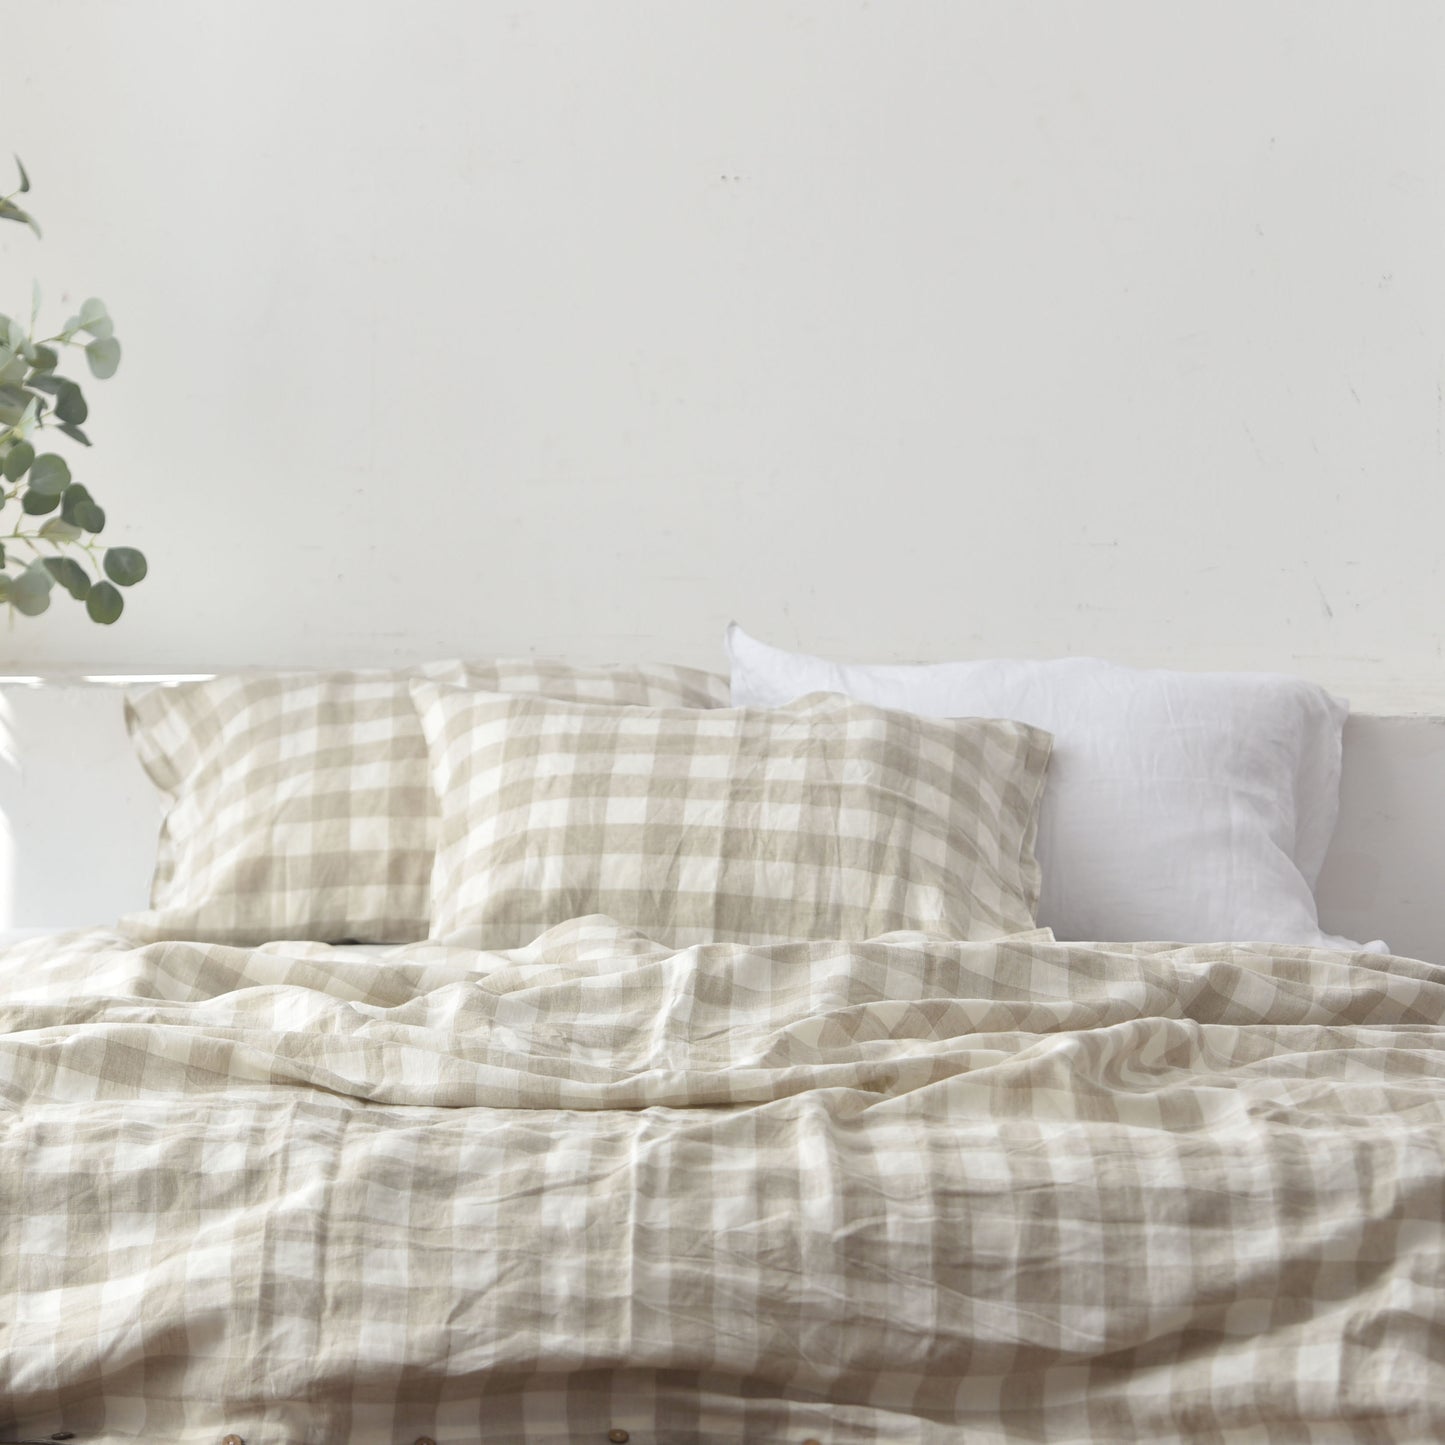 Grid French Linen Duvet Cover+2 Pillowcases Set - Yarn Dyeing 58